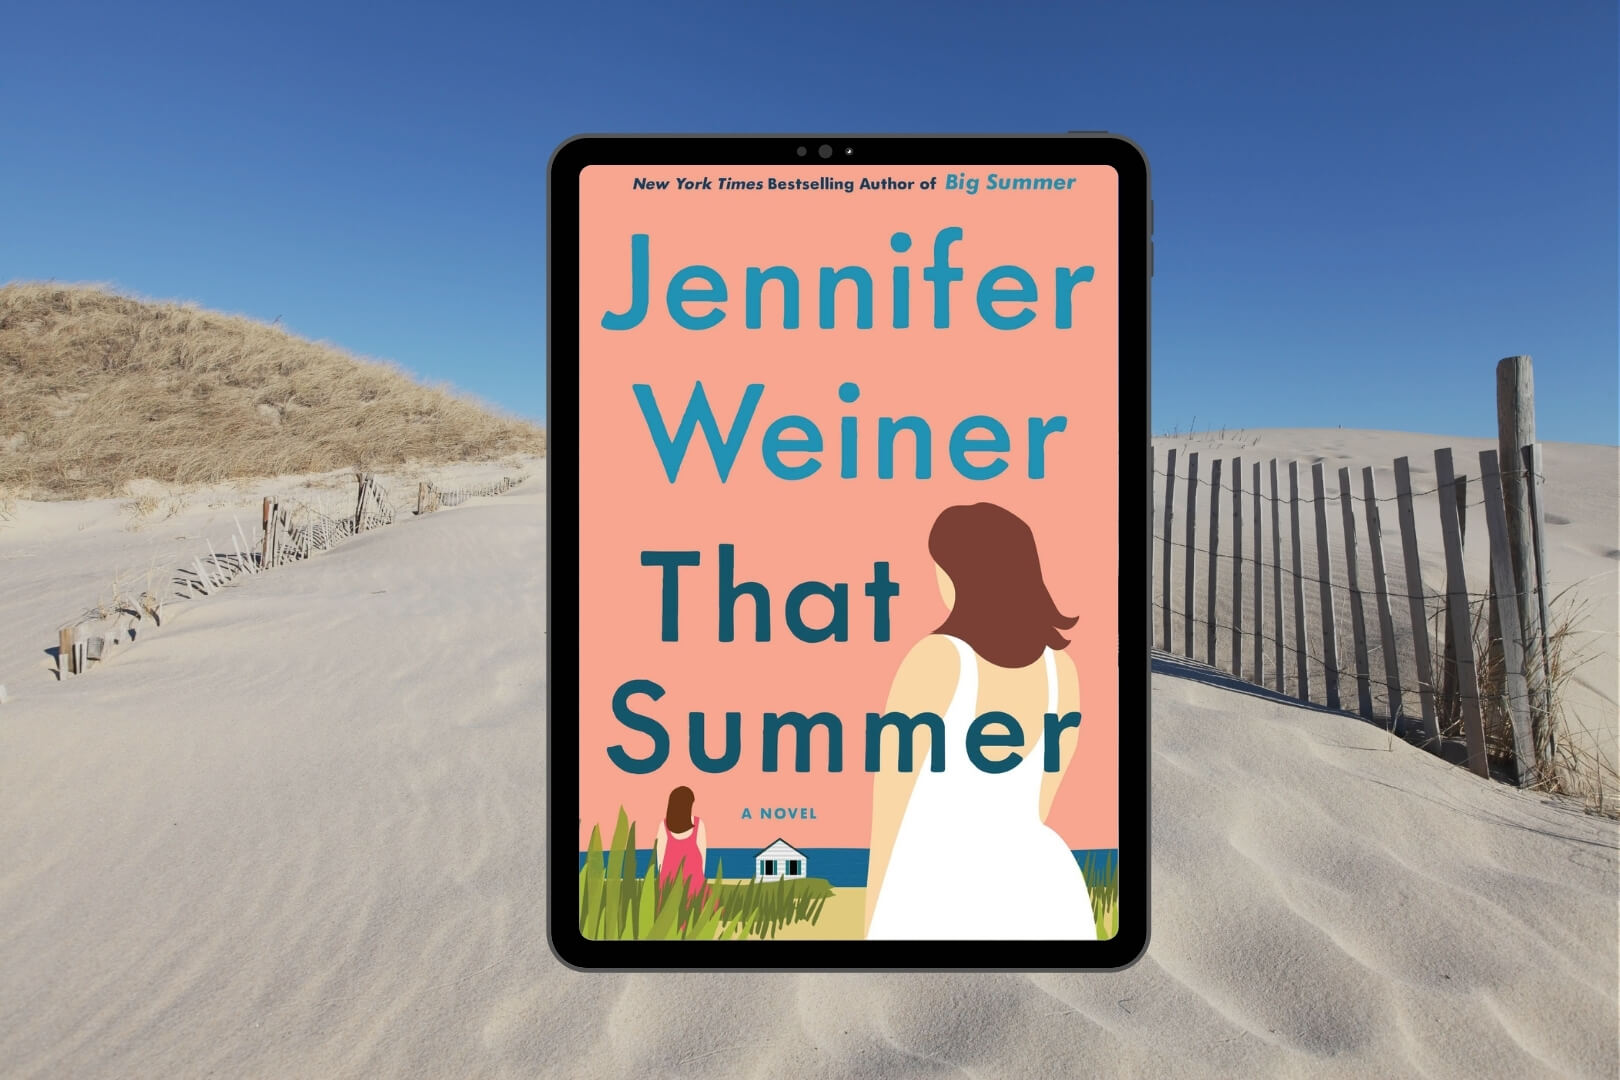 Review: That Summer by Jennifer Weiner